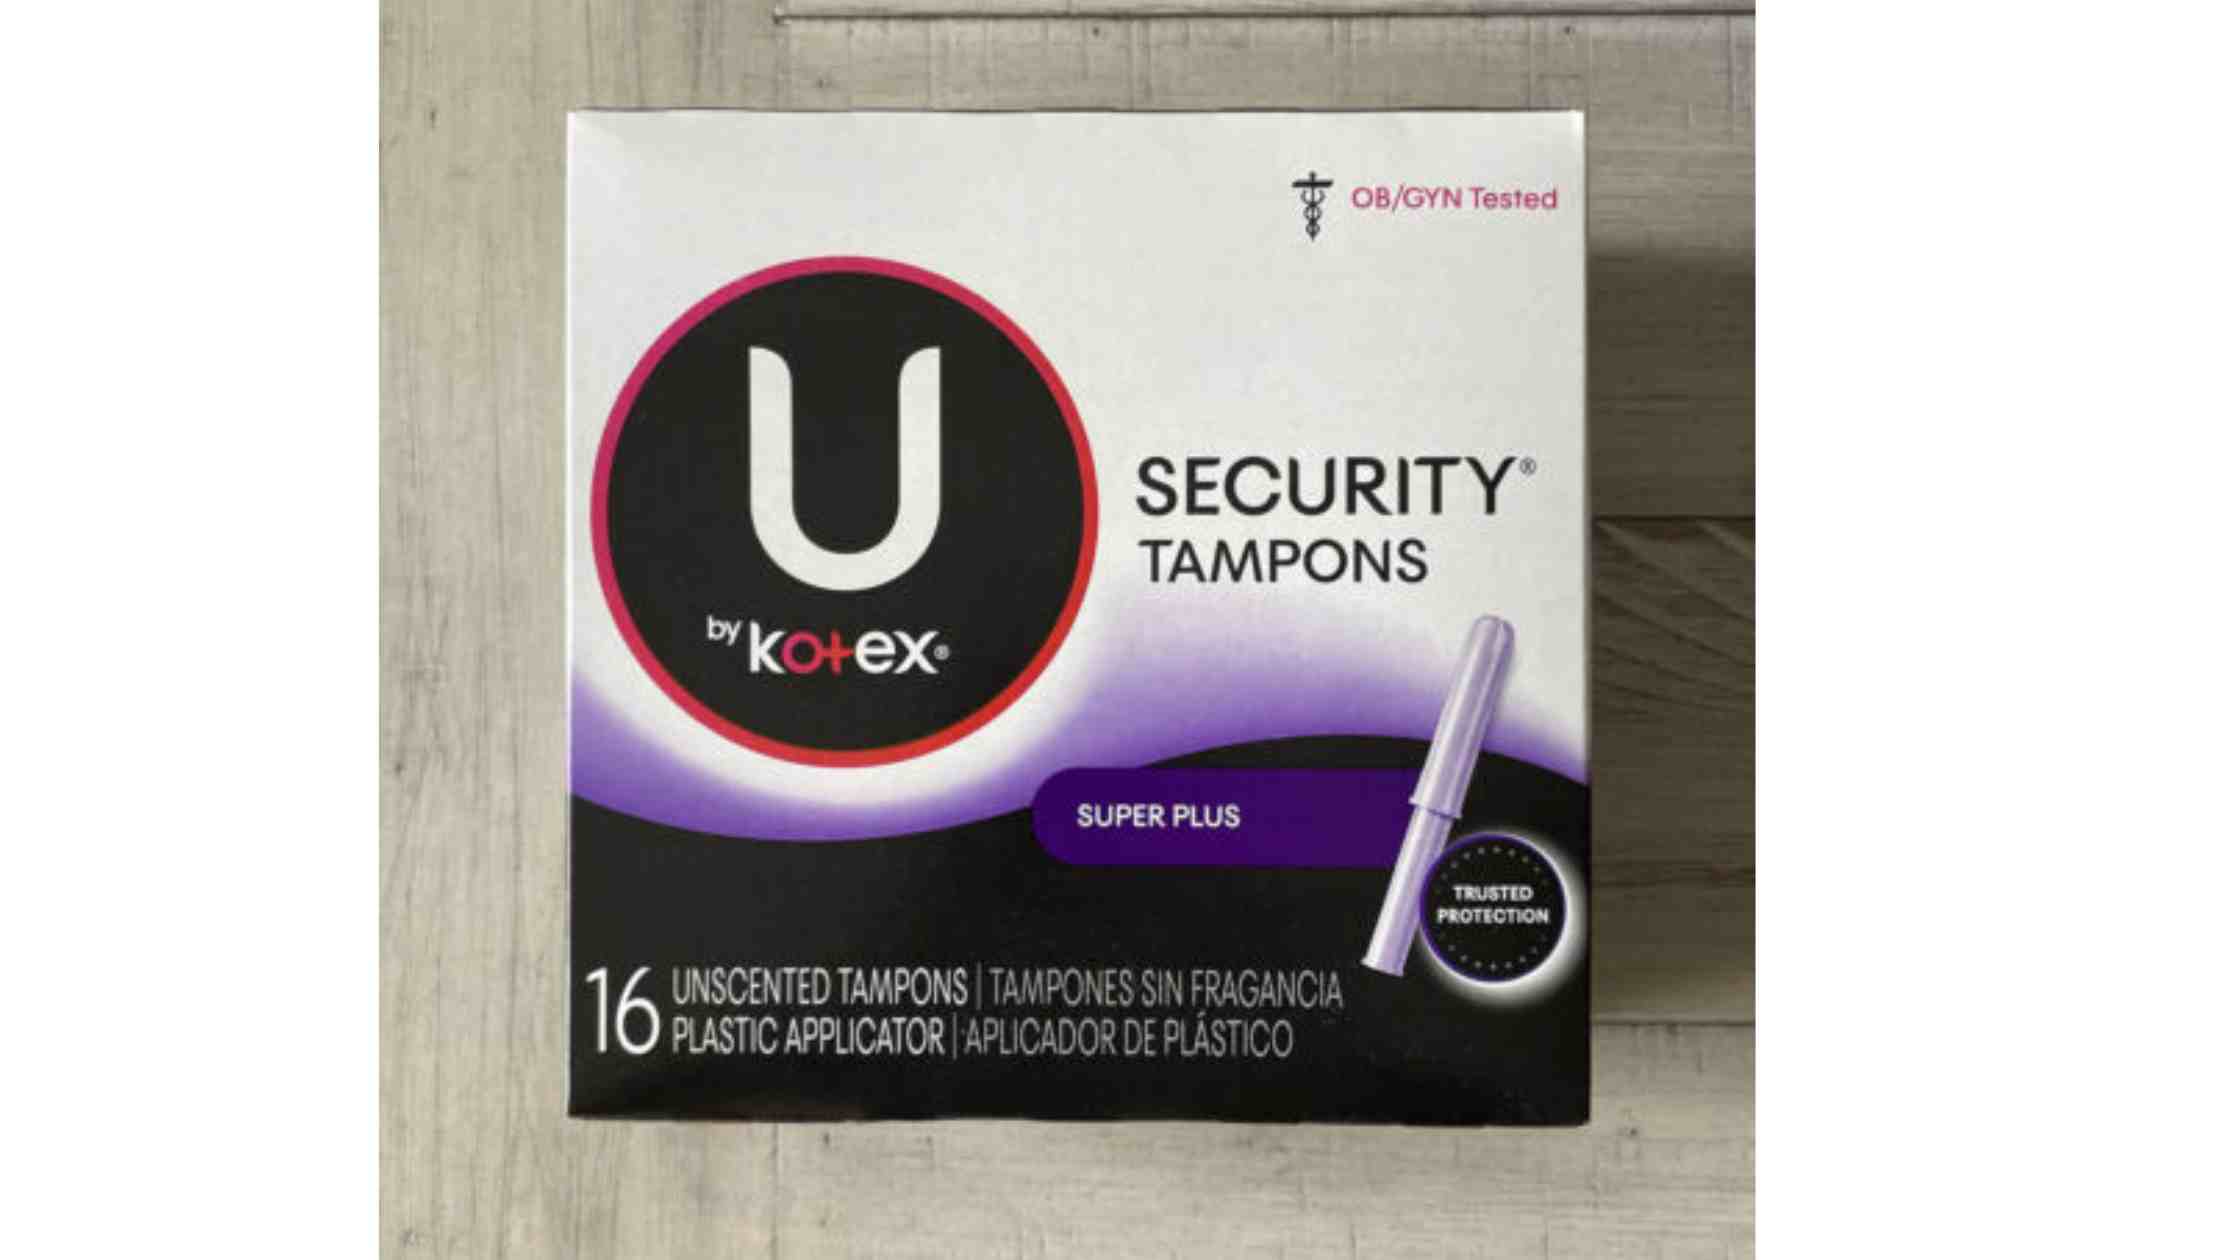 Kotex Tampons discontinued